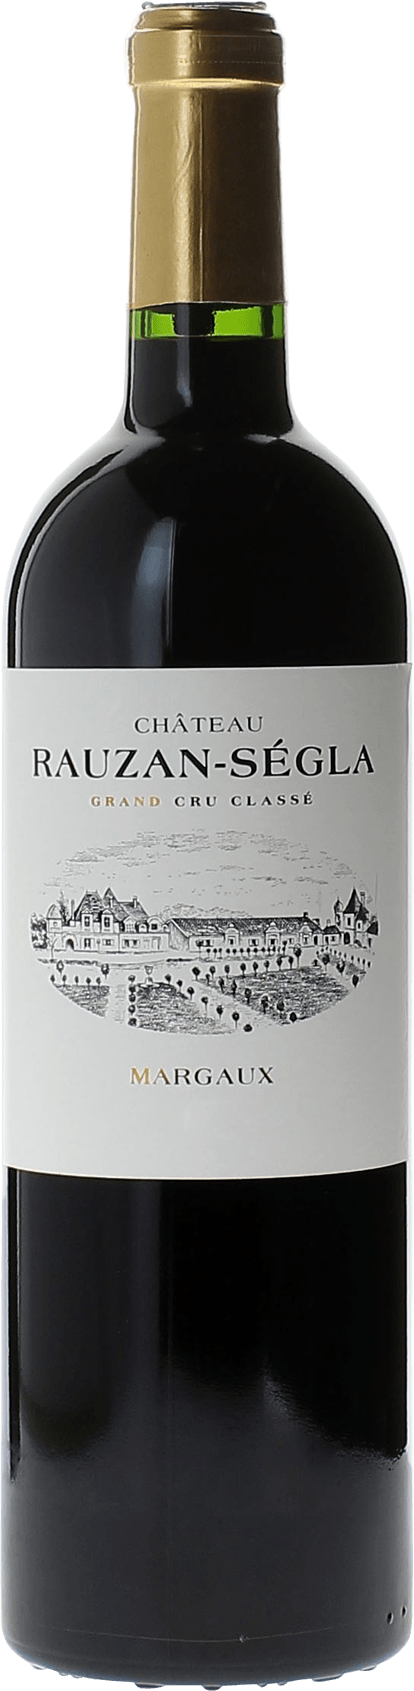 Rauzan-segla 2021 2me Grand cru class Margaux, Bordeaux rouge